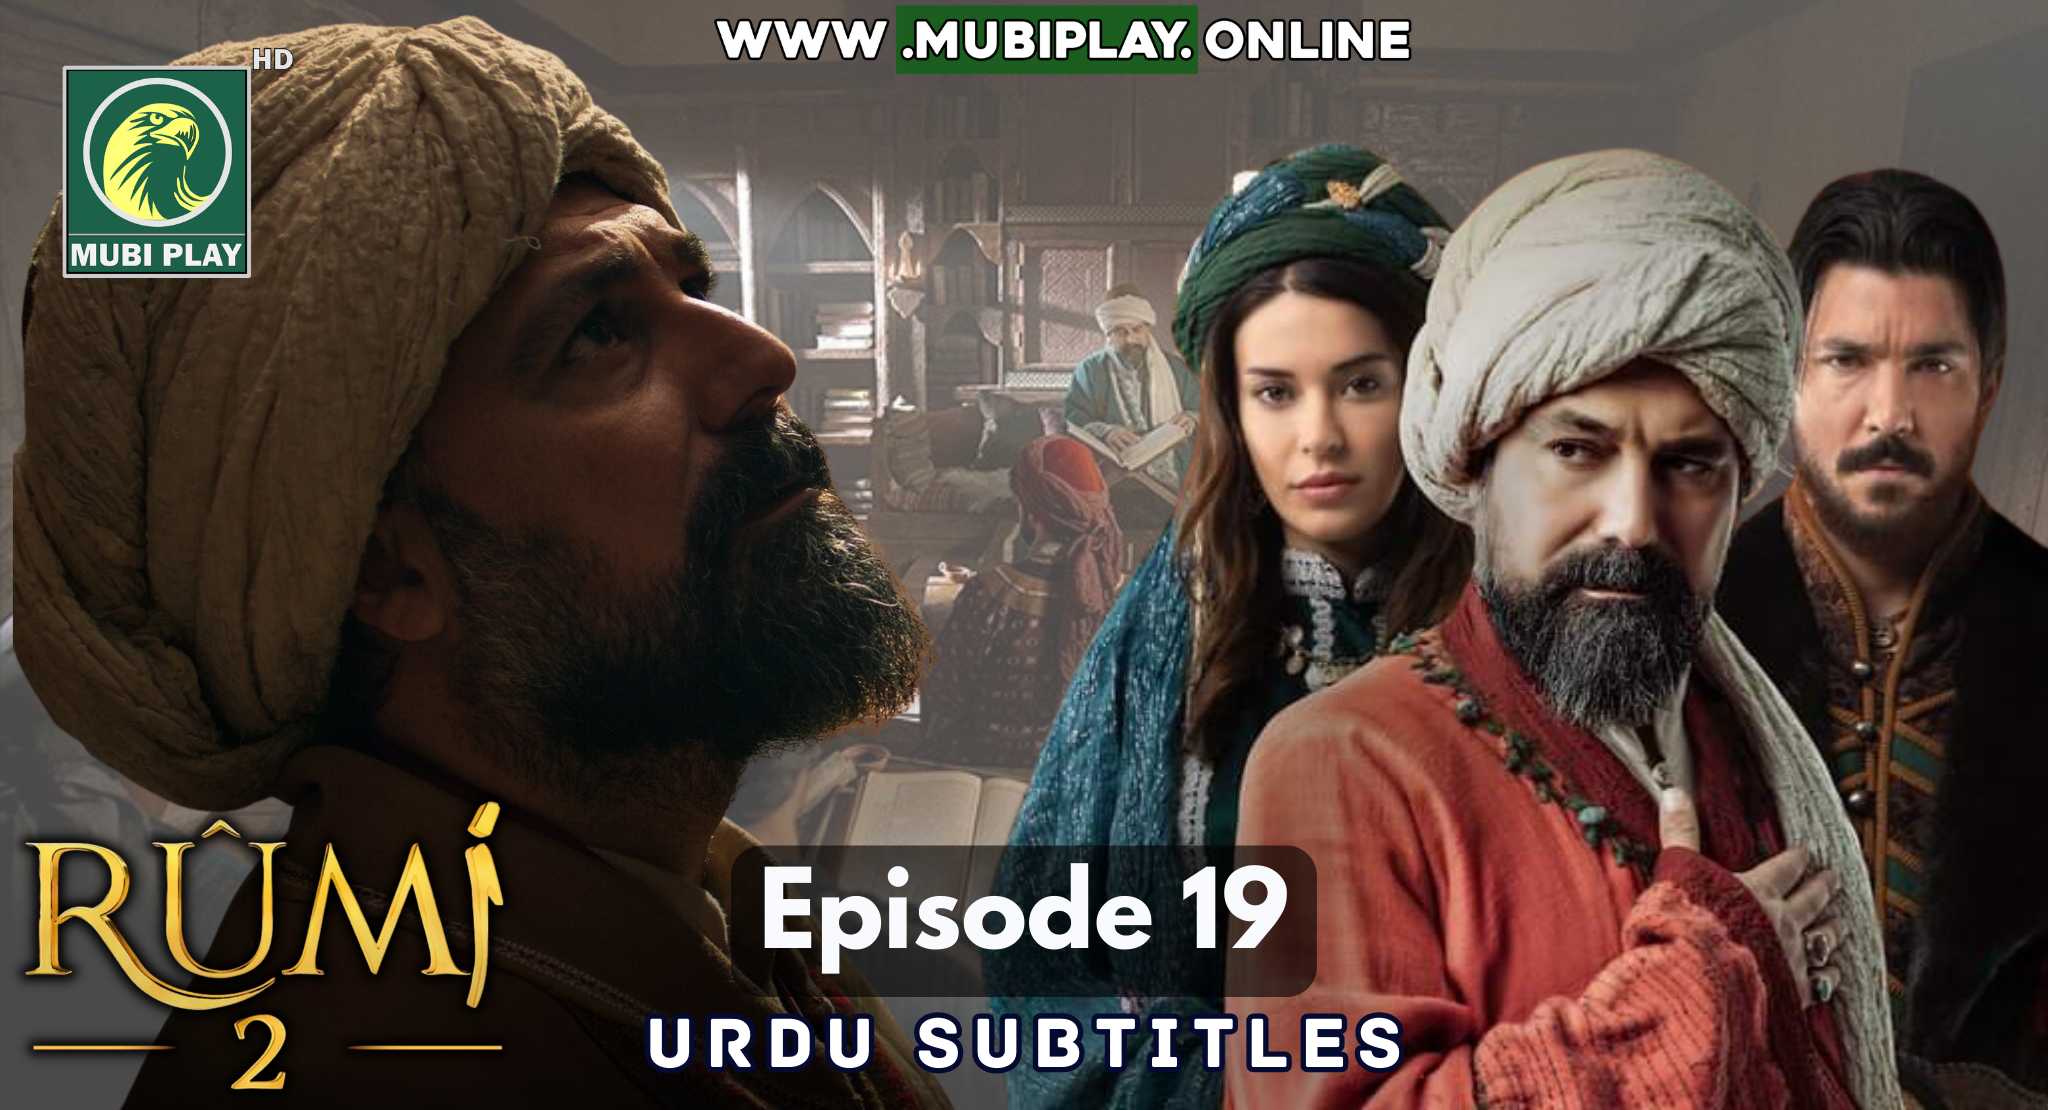 Mevlana Celaleddin Rumi Episode 19 with Urdu Subtitles by Mubi Play